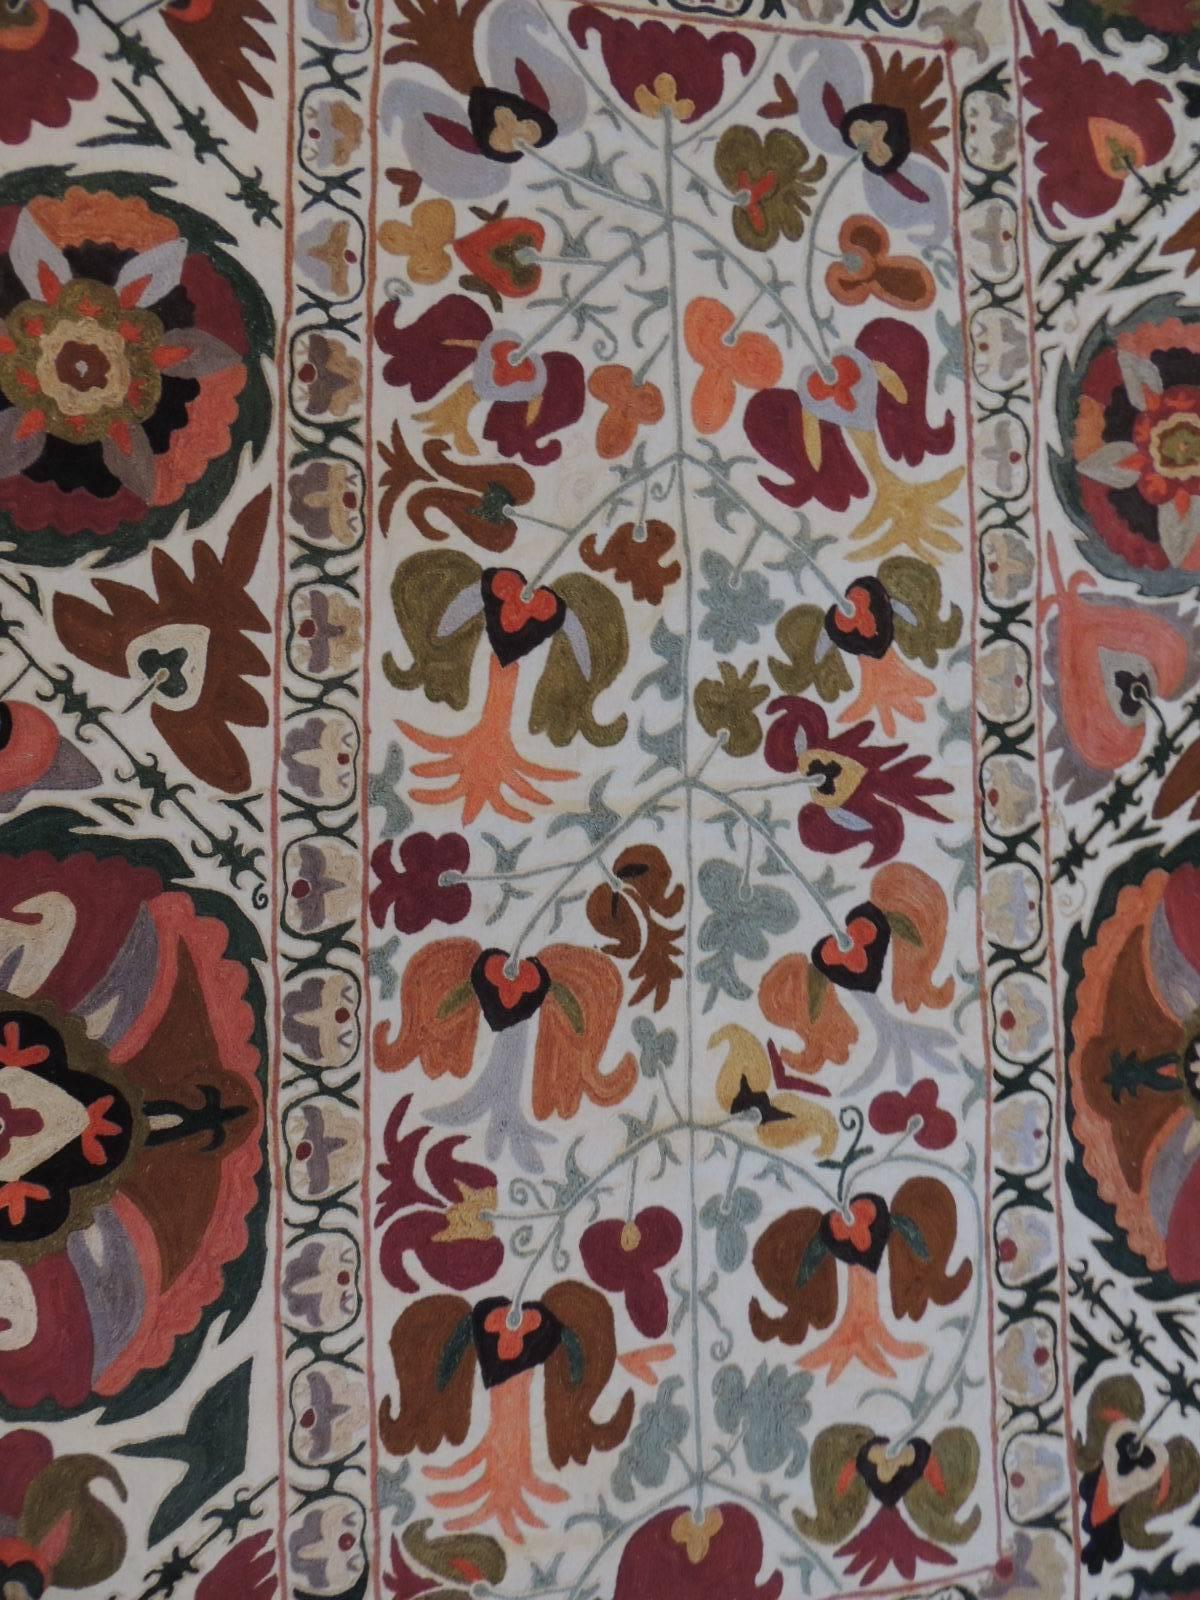 Hand-Crafted Vintage Uzbekistan Embroidery Suzani Textile Panel